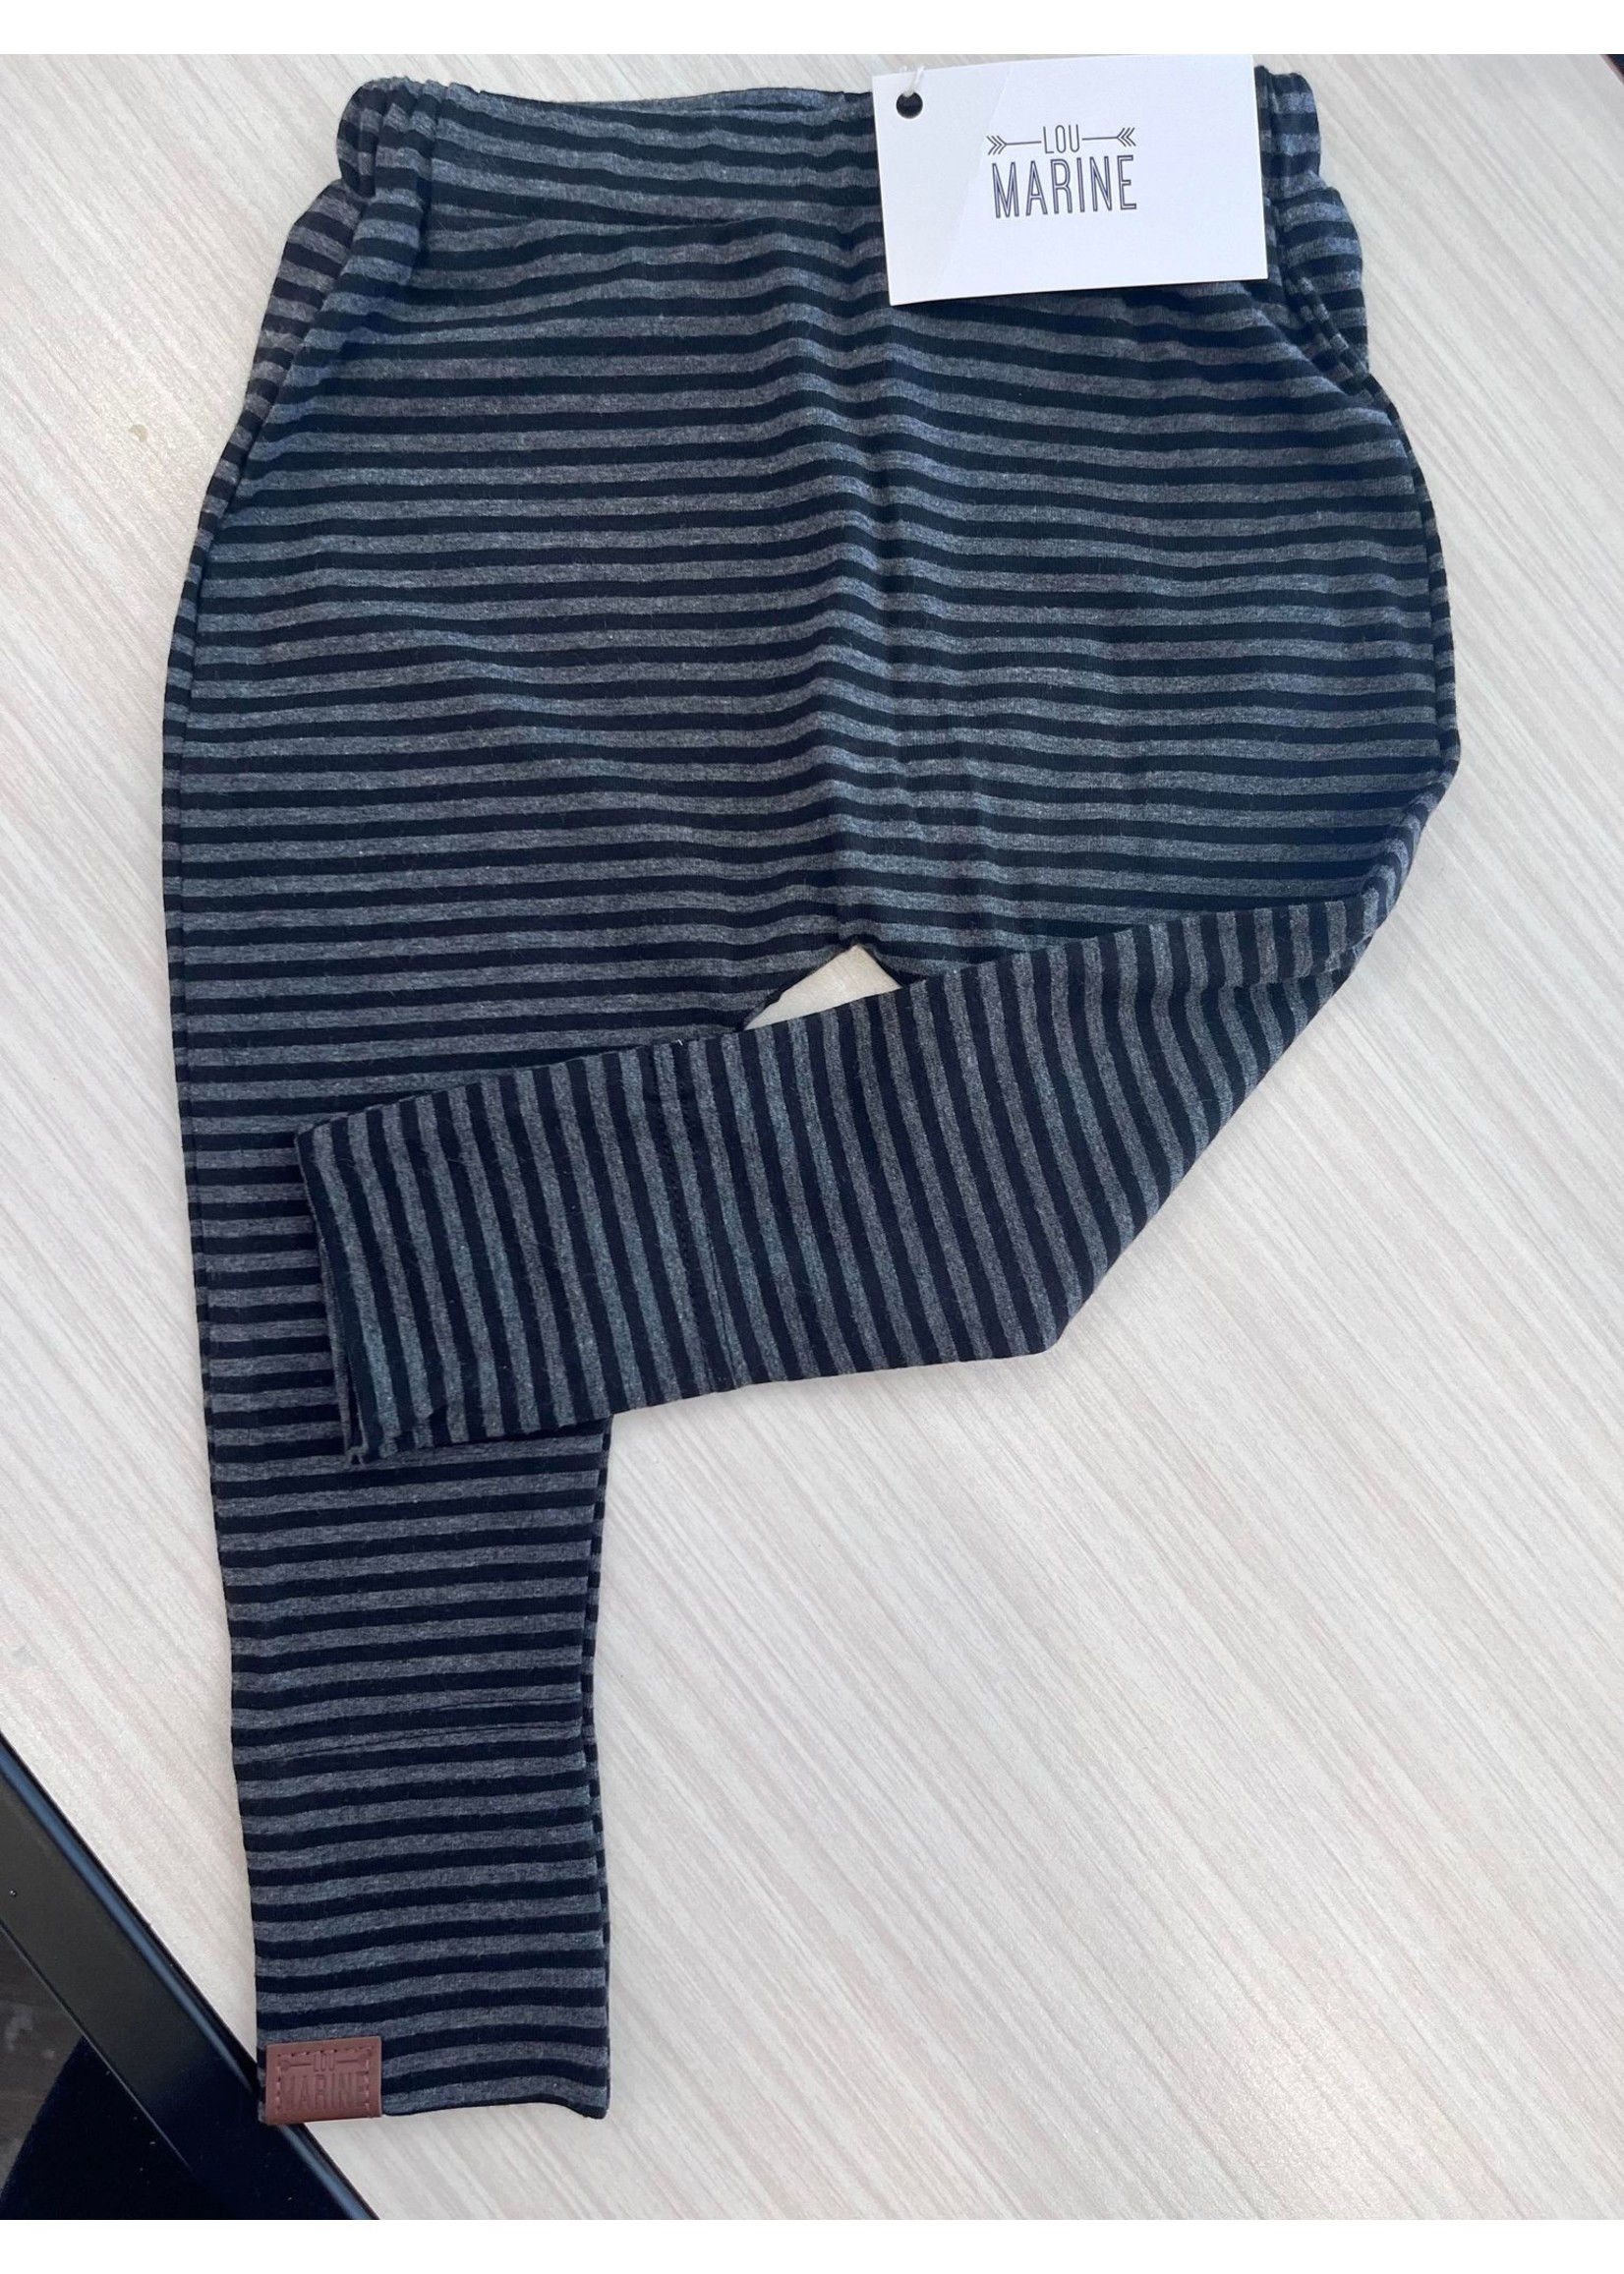 Lou Marine || Pantalon Évolutif Noir rayé 6-12 mois